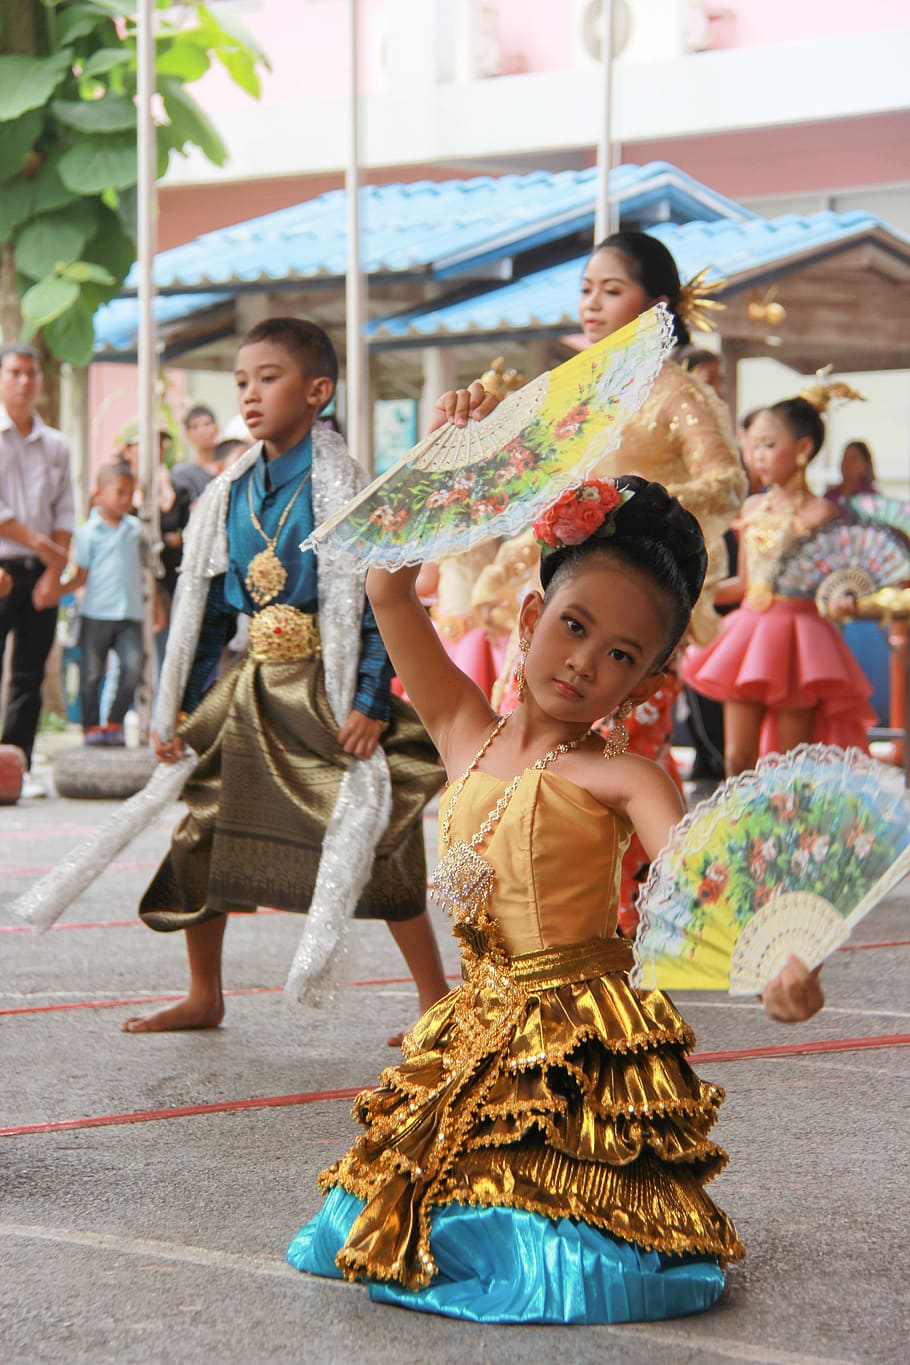 Thailand, Dance, Pupils, the little girl, cute, incidental people, childhood, full length, girls, smiling